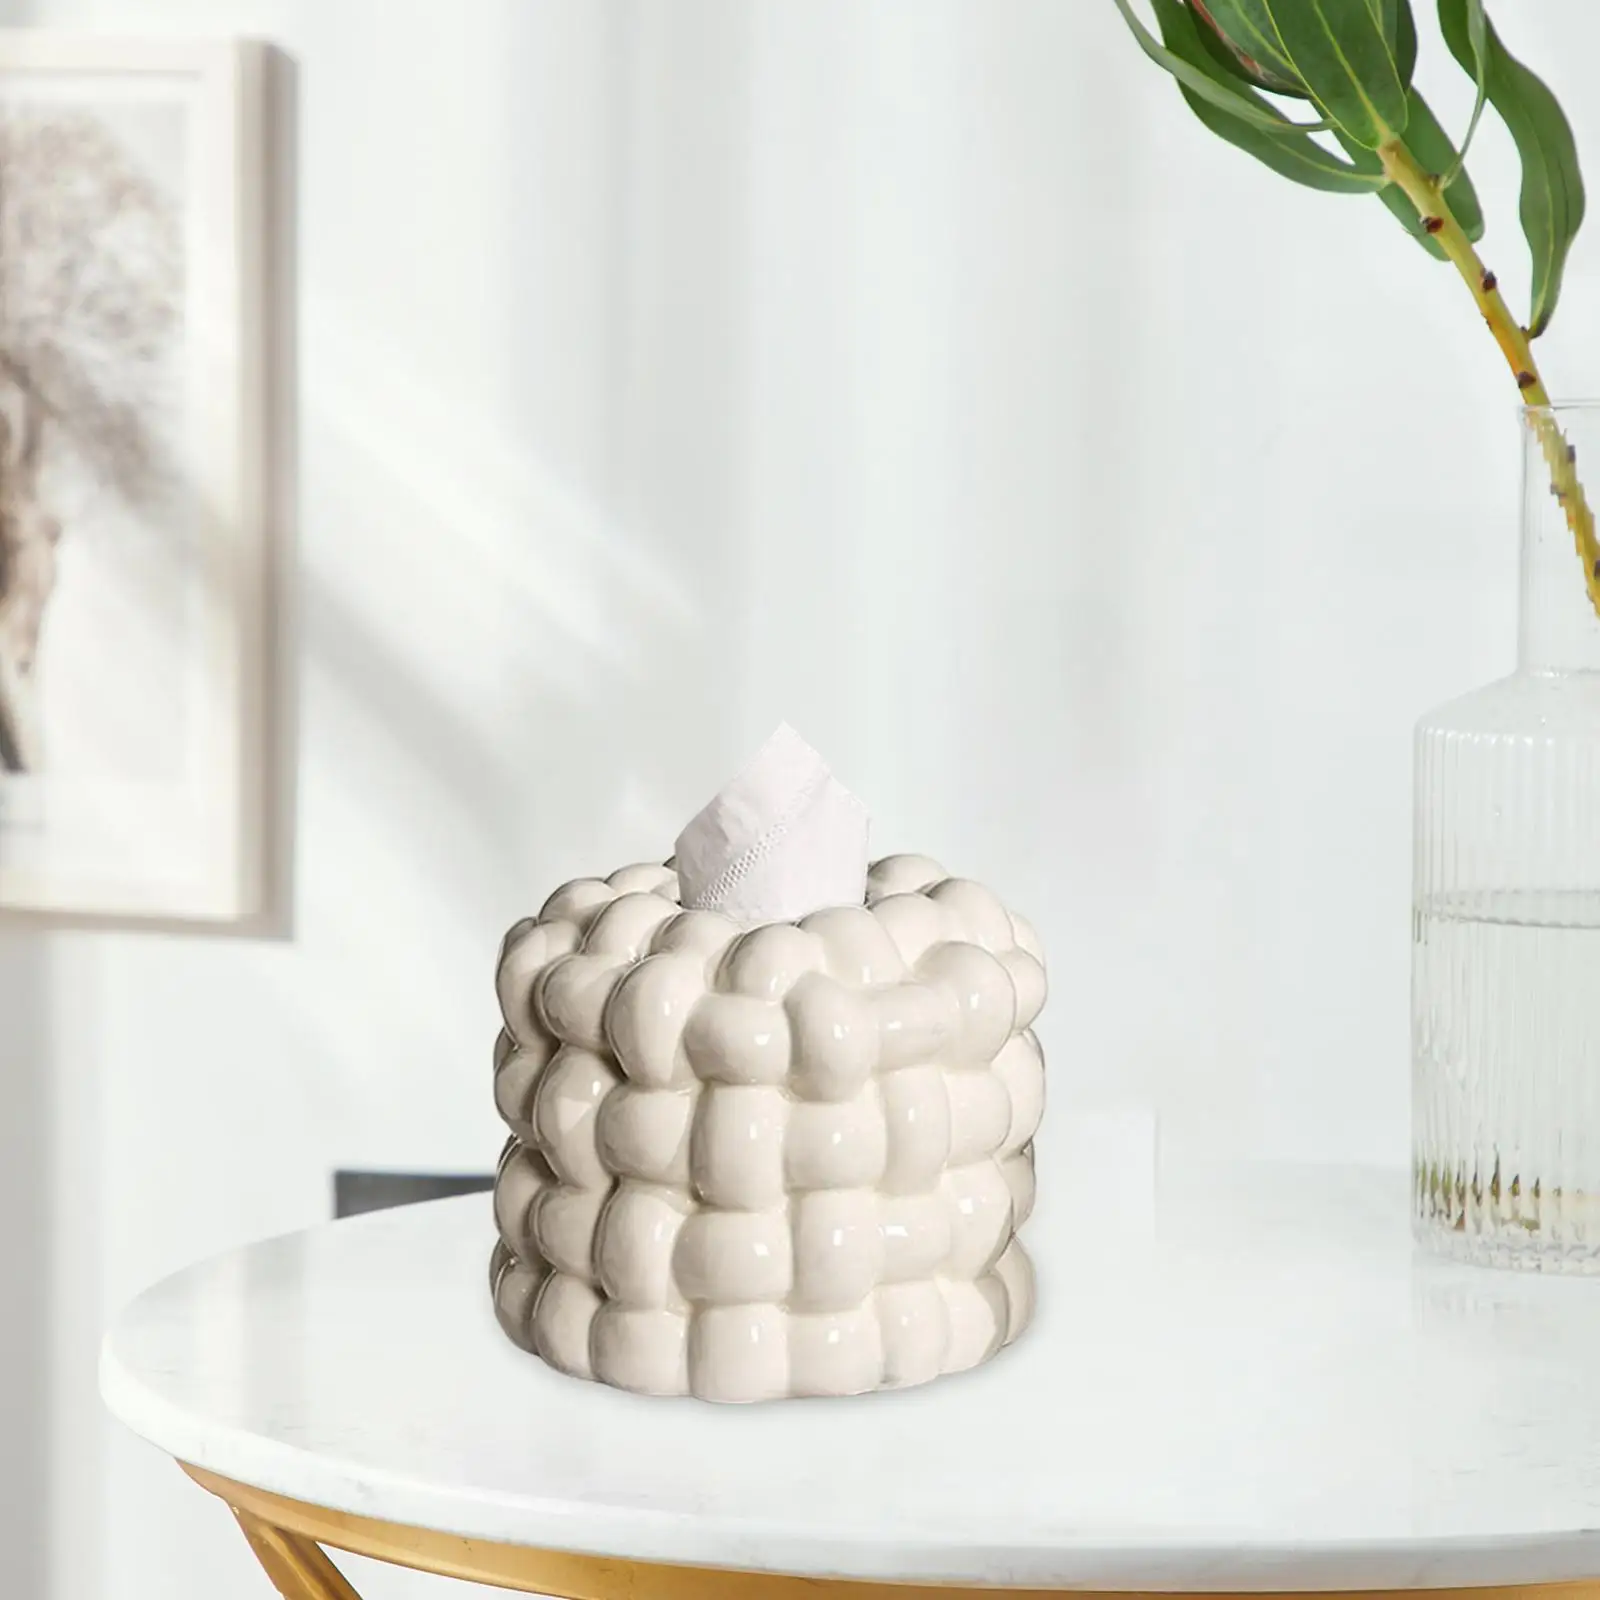 Paper Napkin Holder Case Ceramic Tissue Holder Decorative for Tea Table Home Bedroom